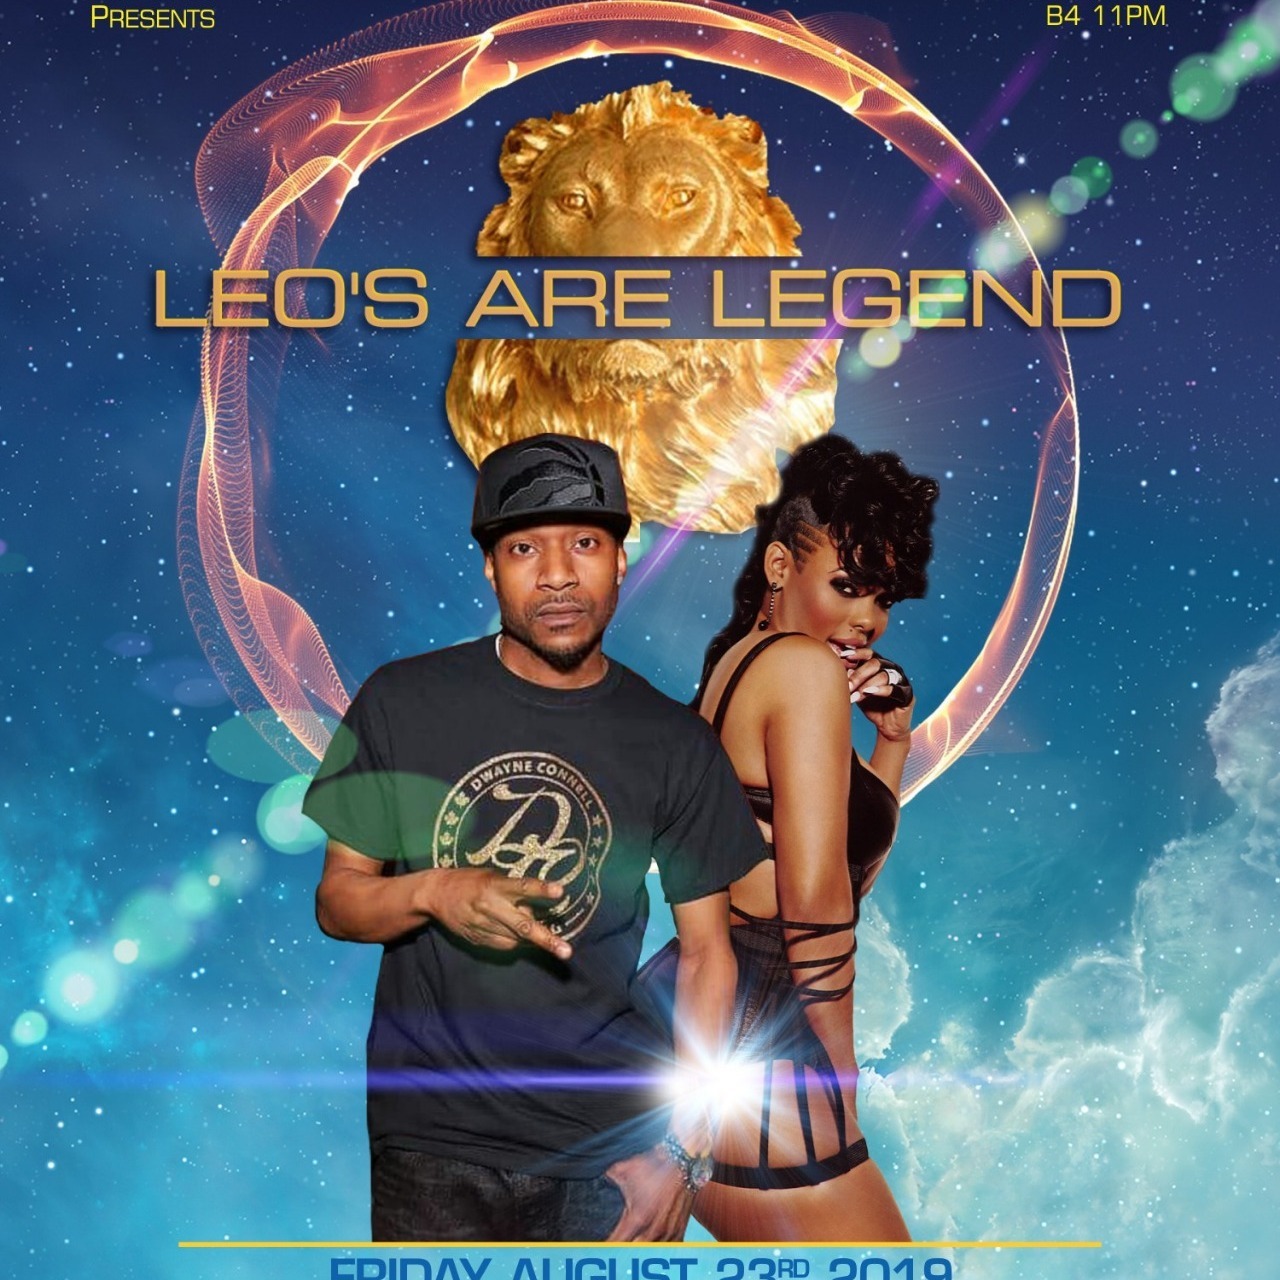 Leo's Are Legend